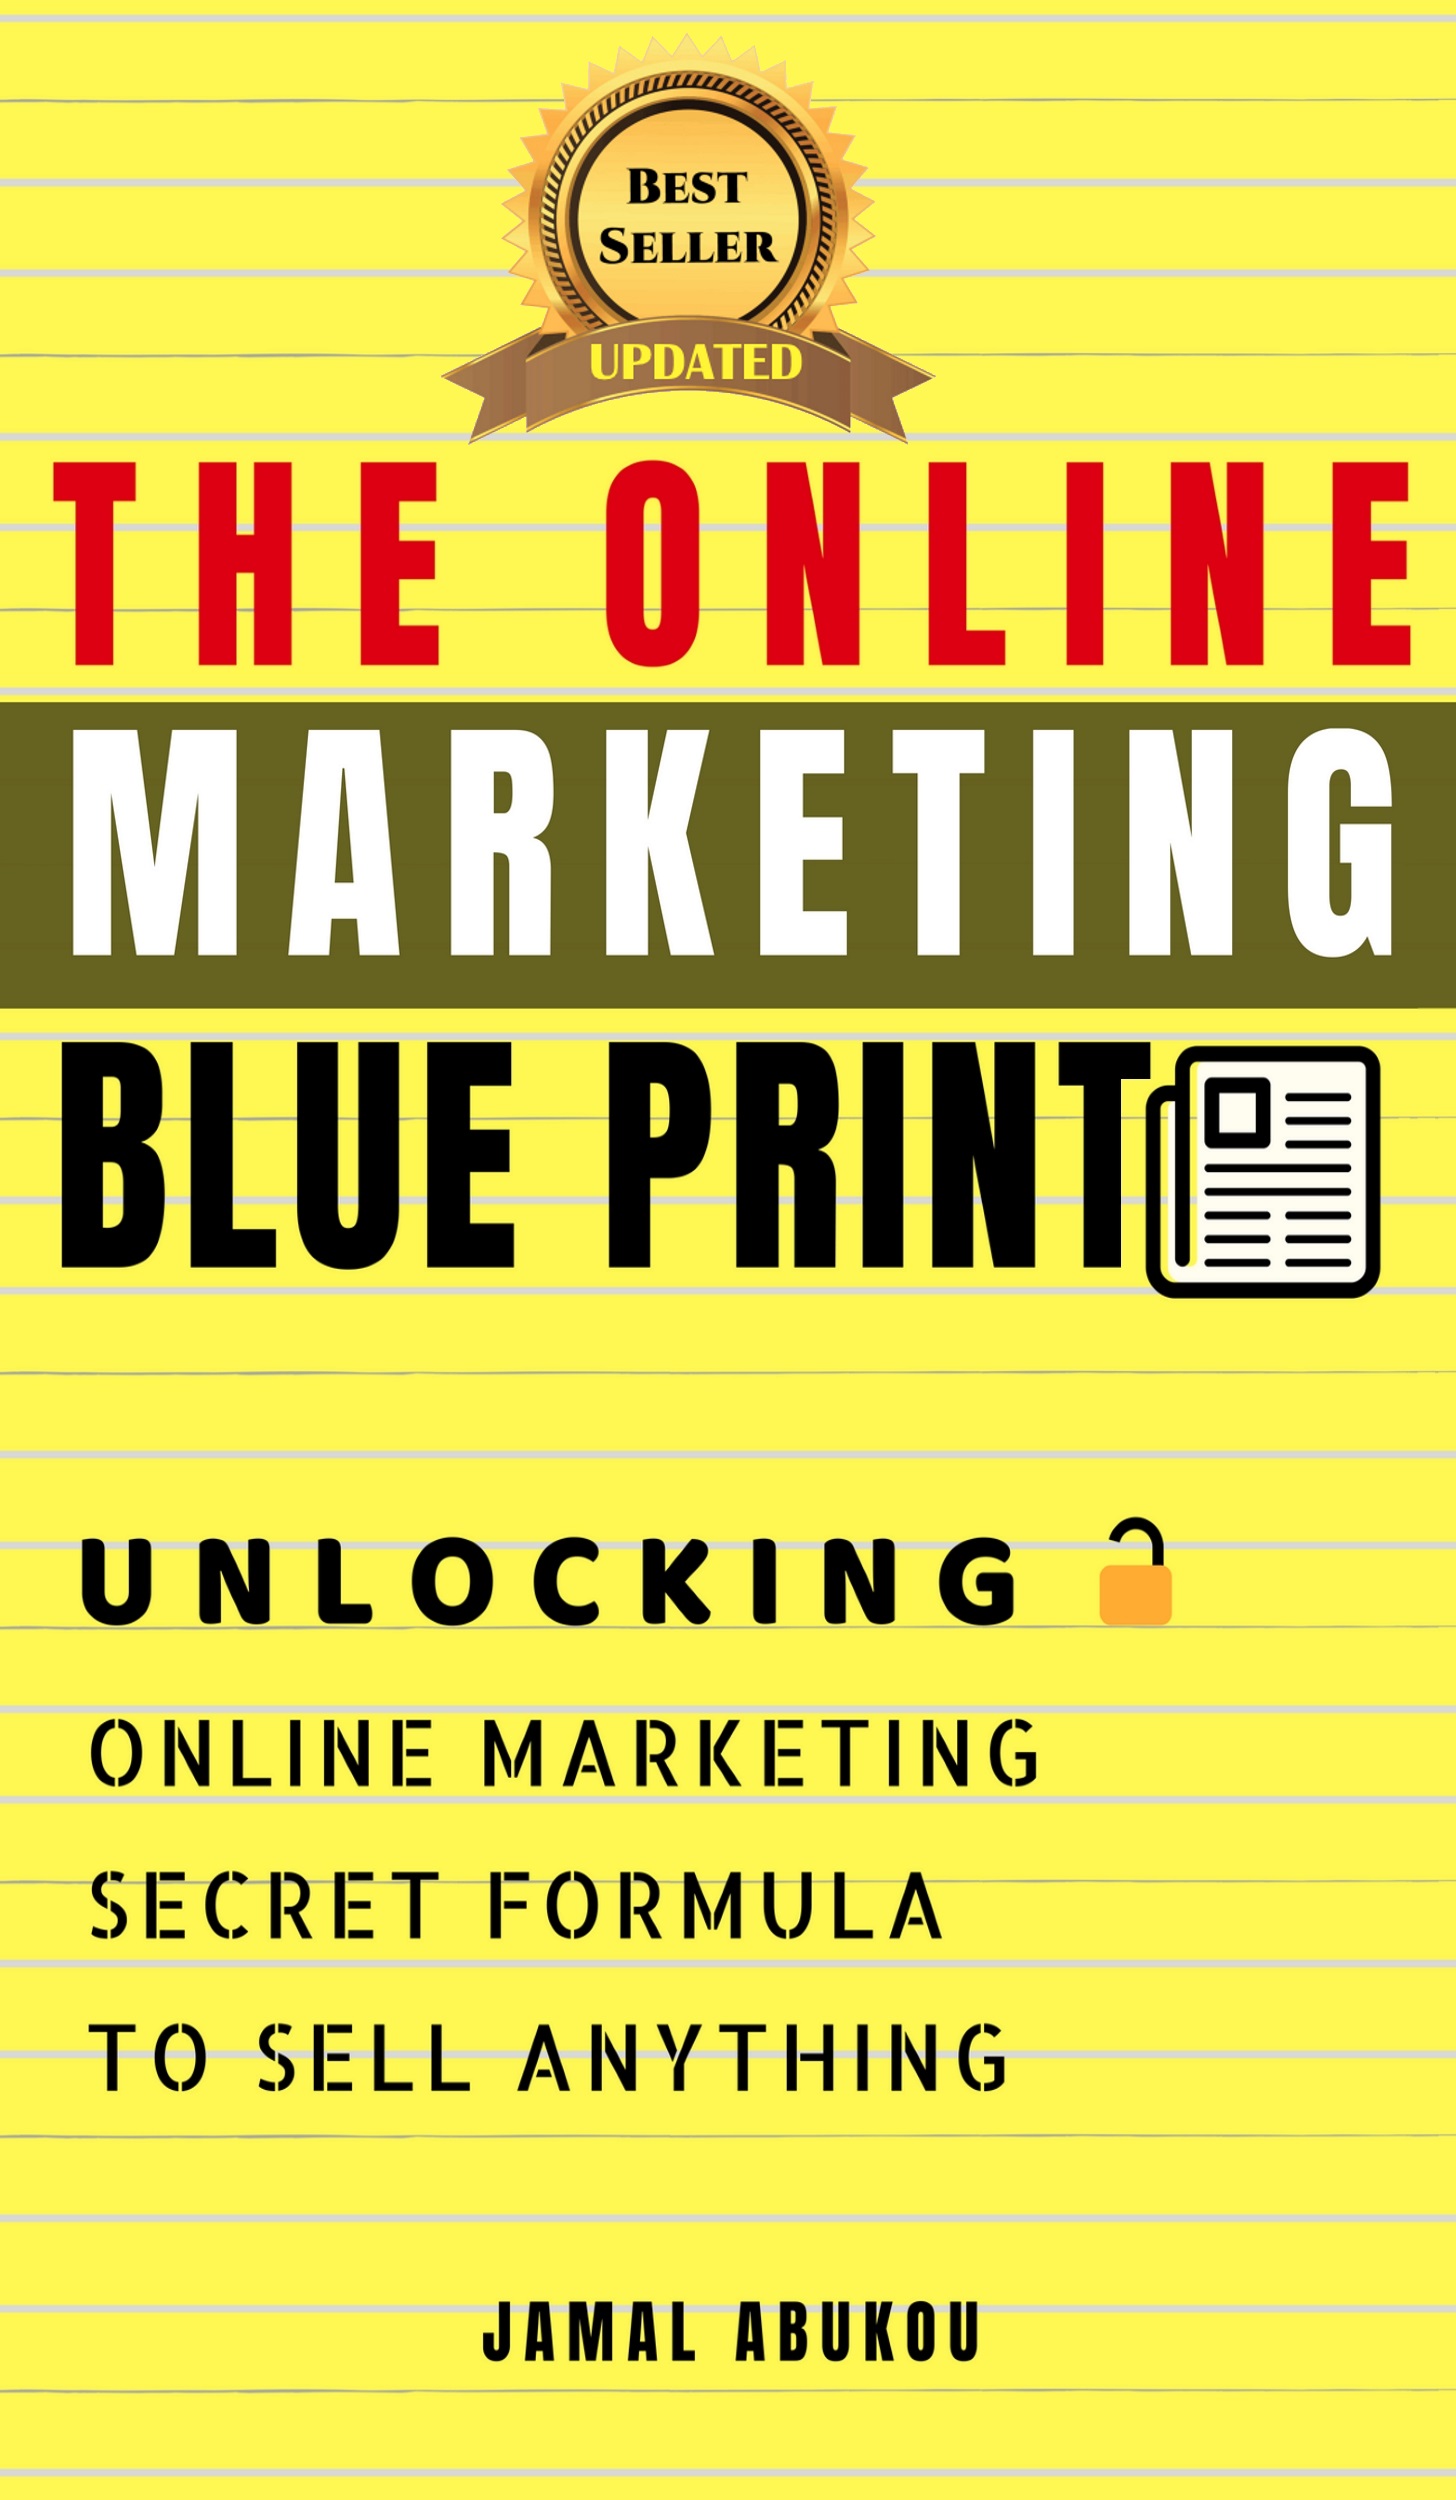 FREE: The Online Marketing Blueprint by Jamal Abukou